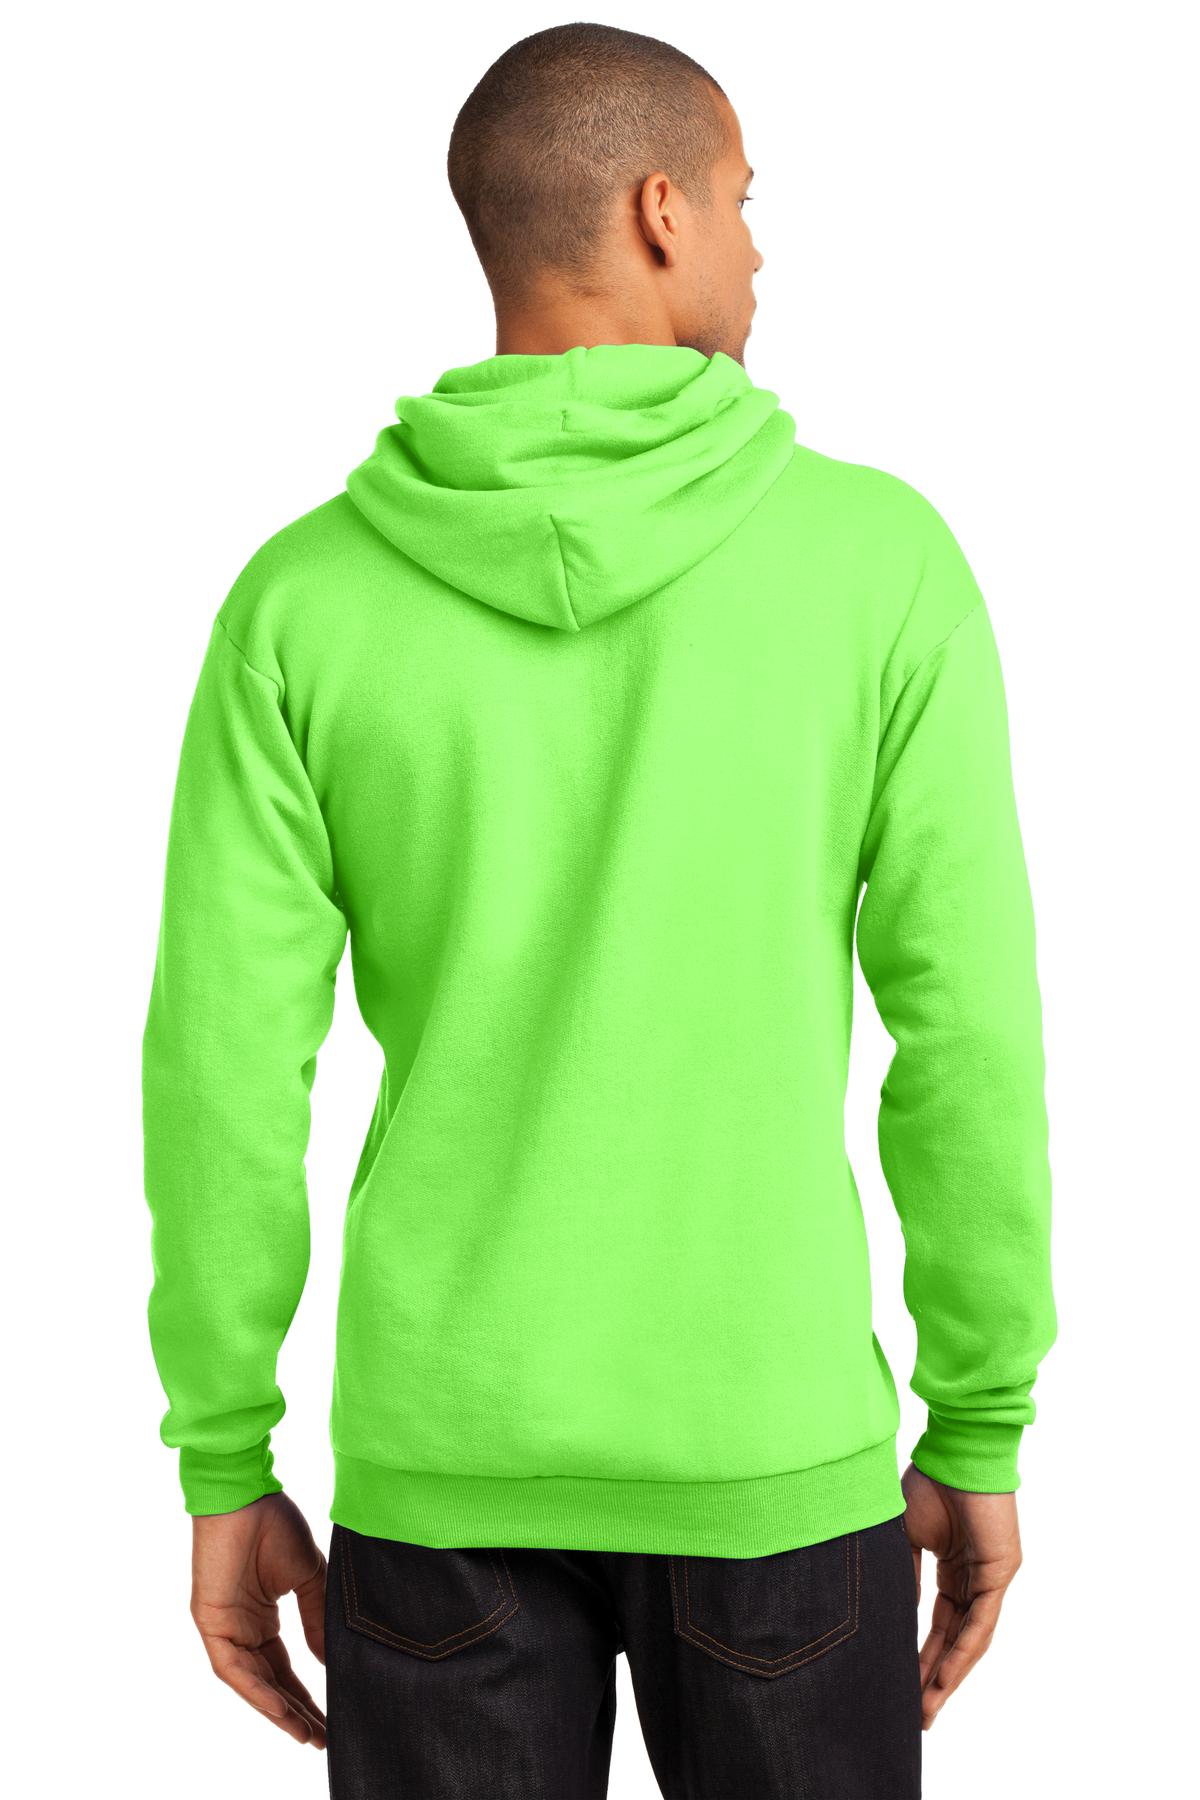 Port & Company - Core Fleece Pullover Hooded Sweatshirt. PC78H - Neon Green